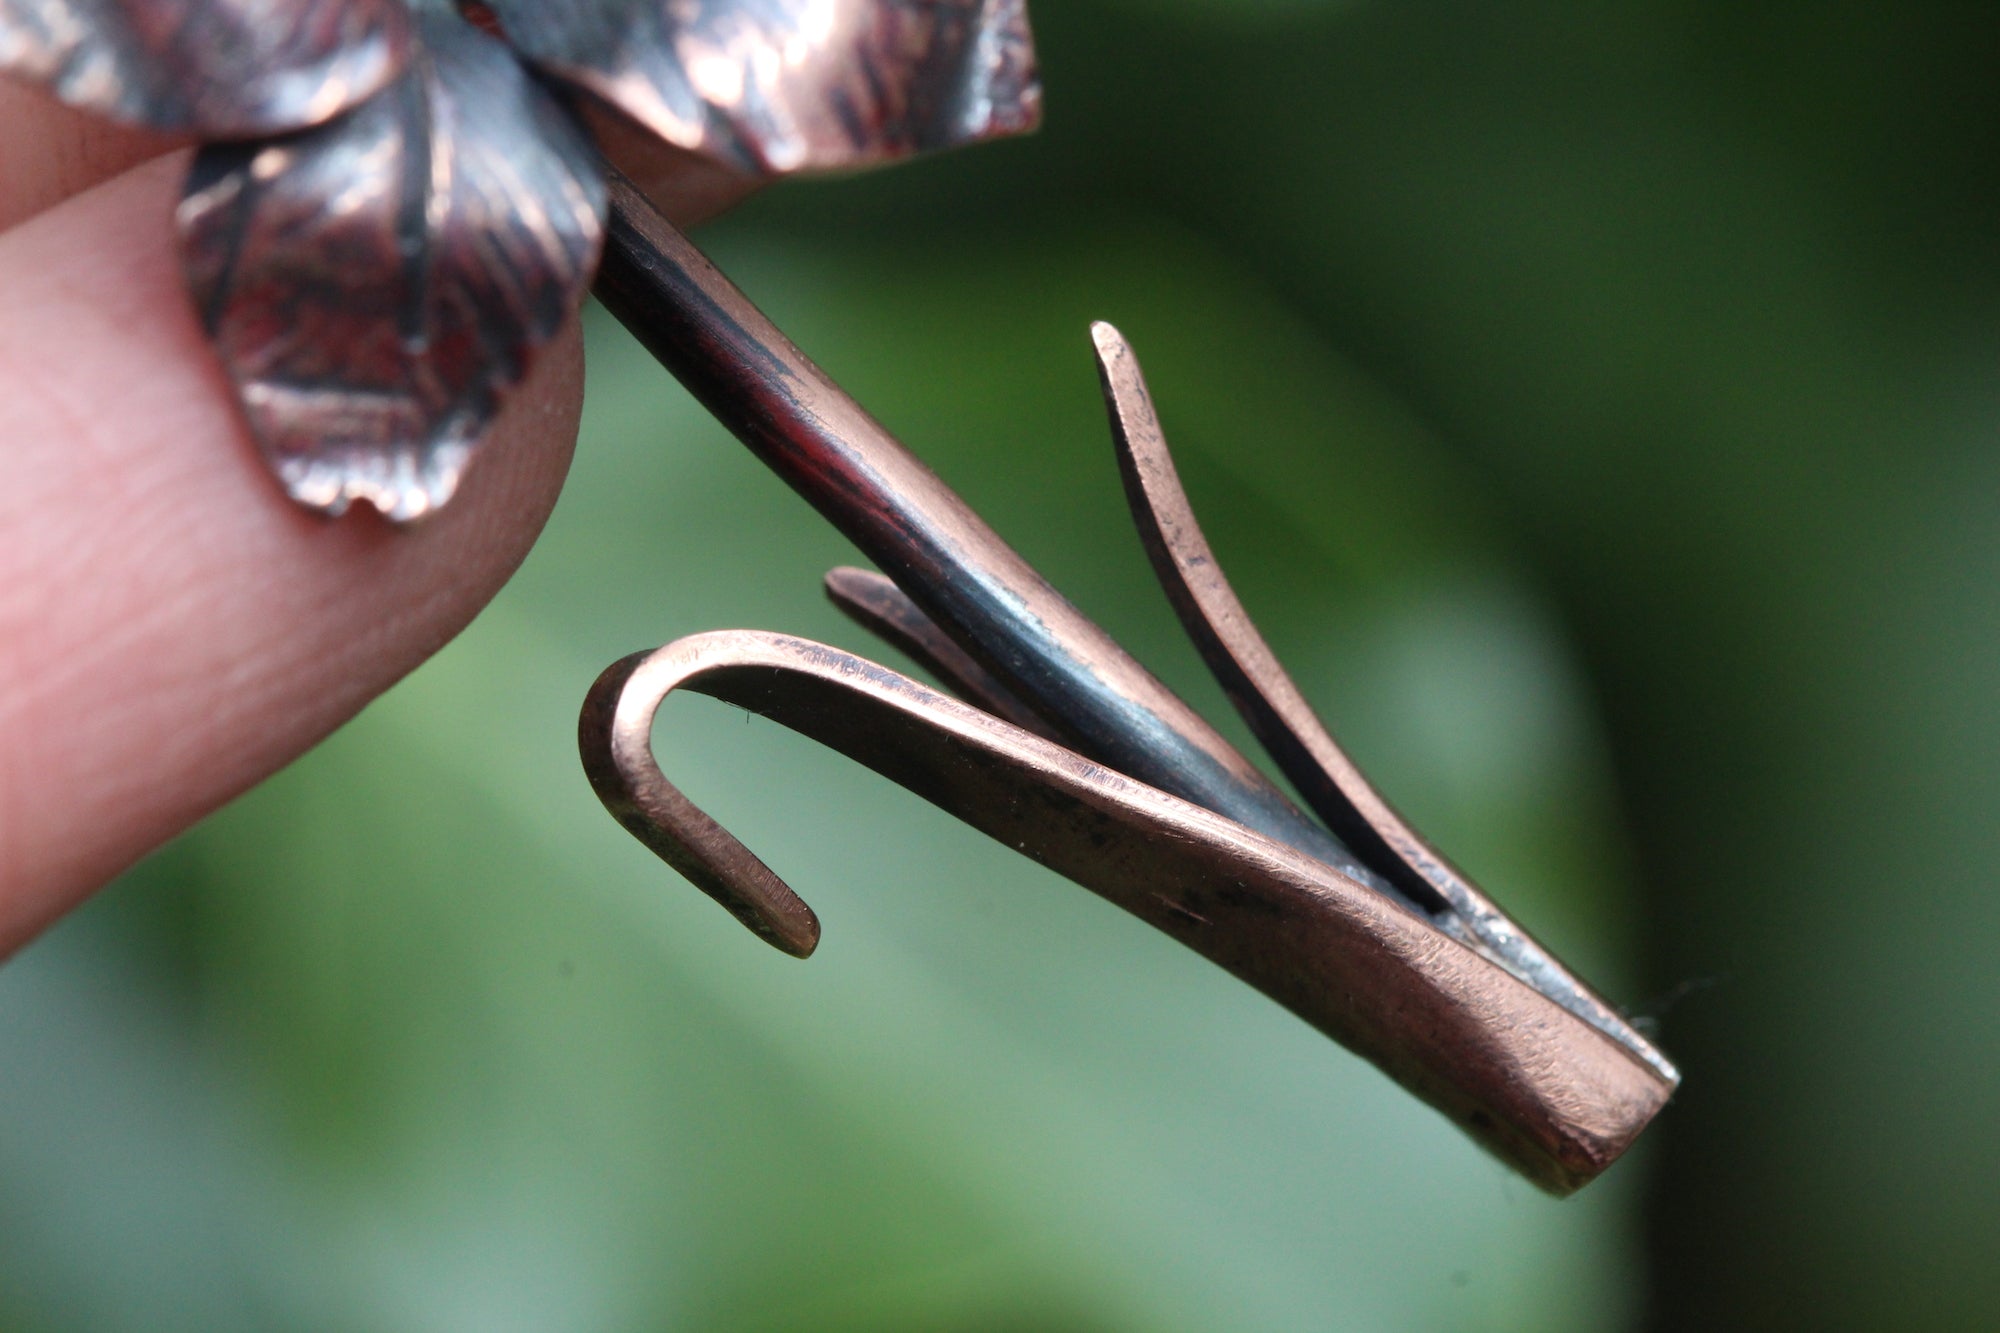 IRIS Handmade Copper Flower Necklace